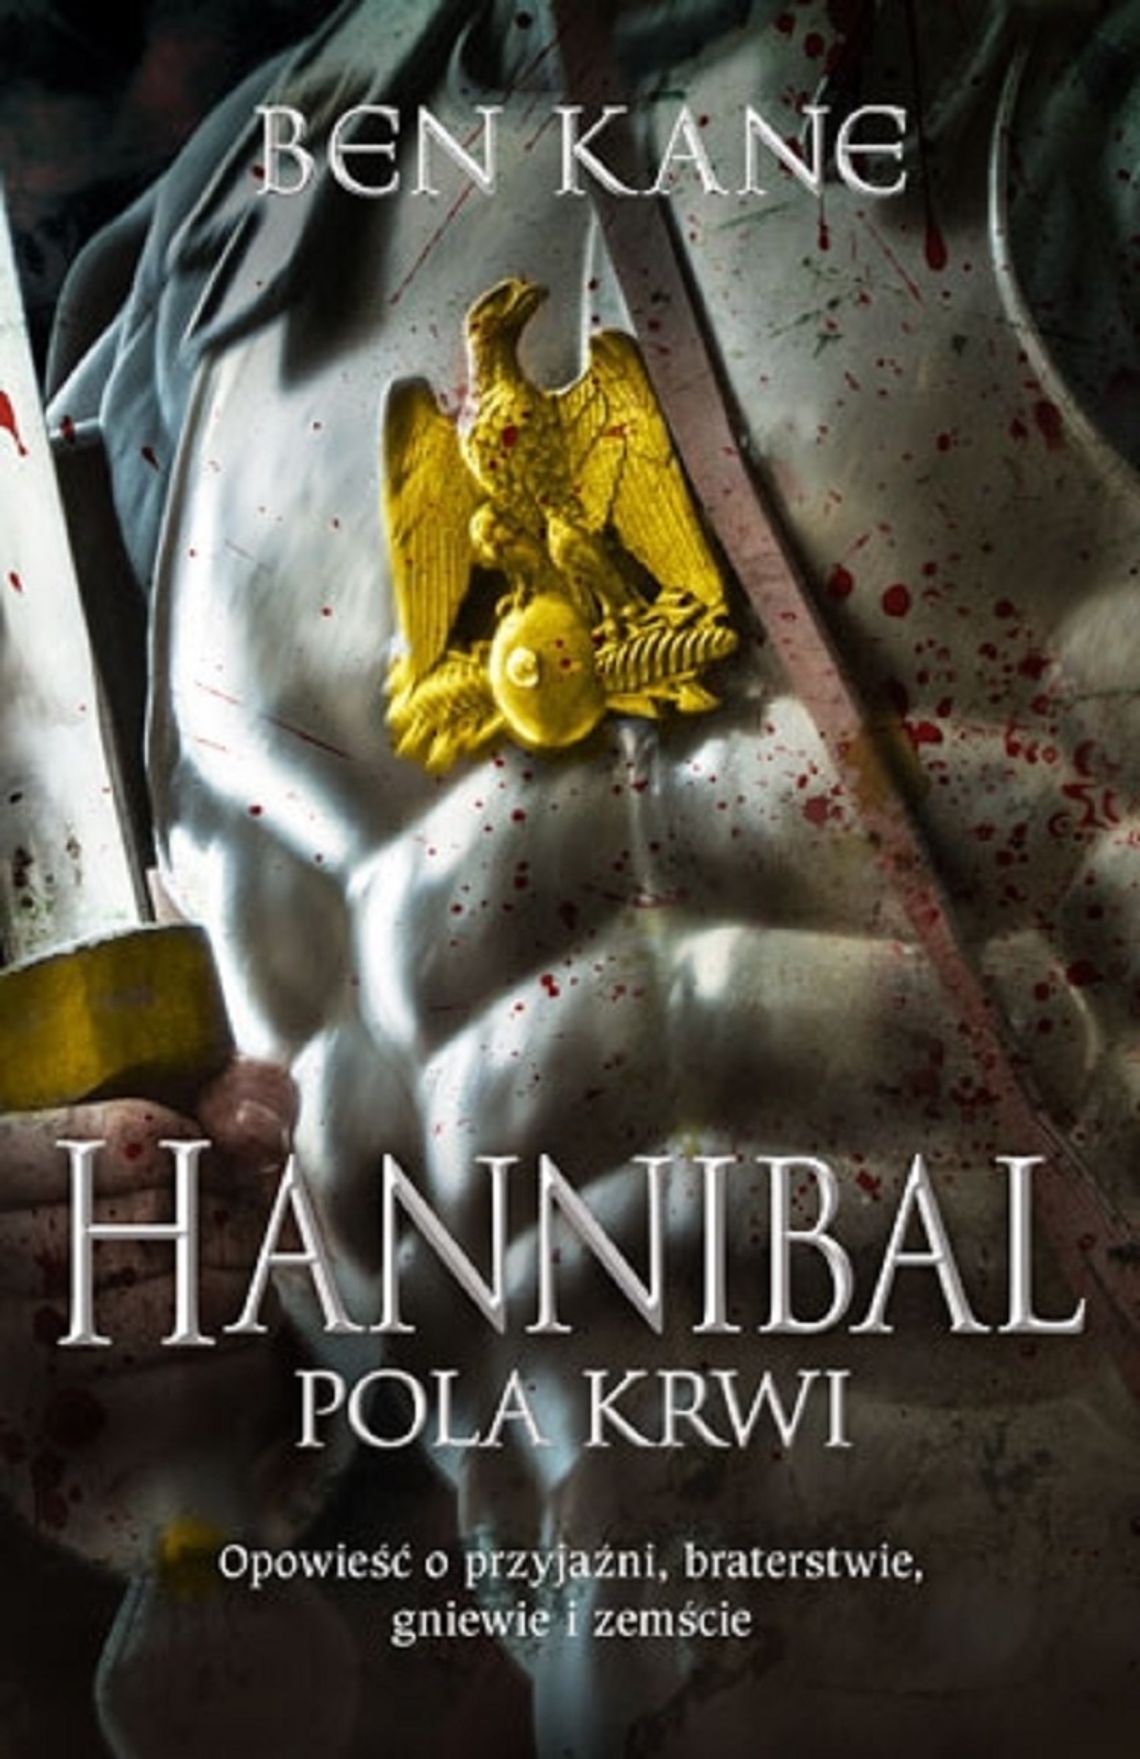 Ben Kane "Hannibal. Pola krwi"; wyd. Znak